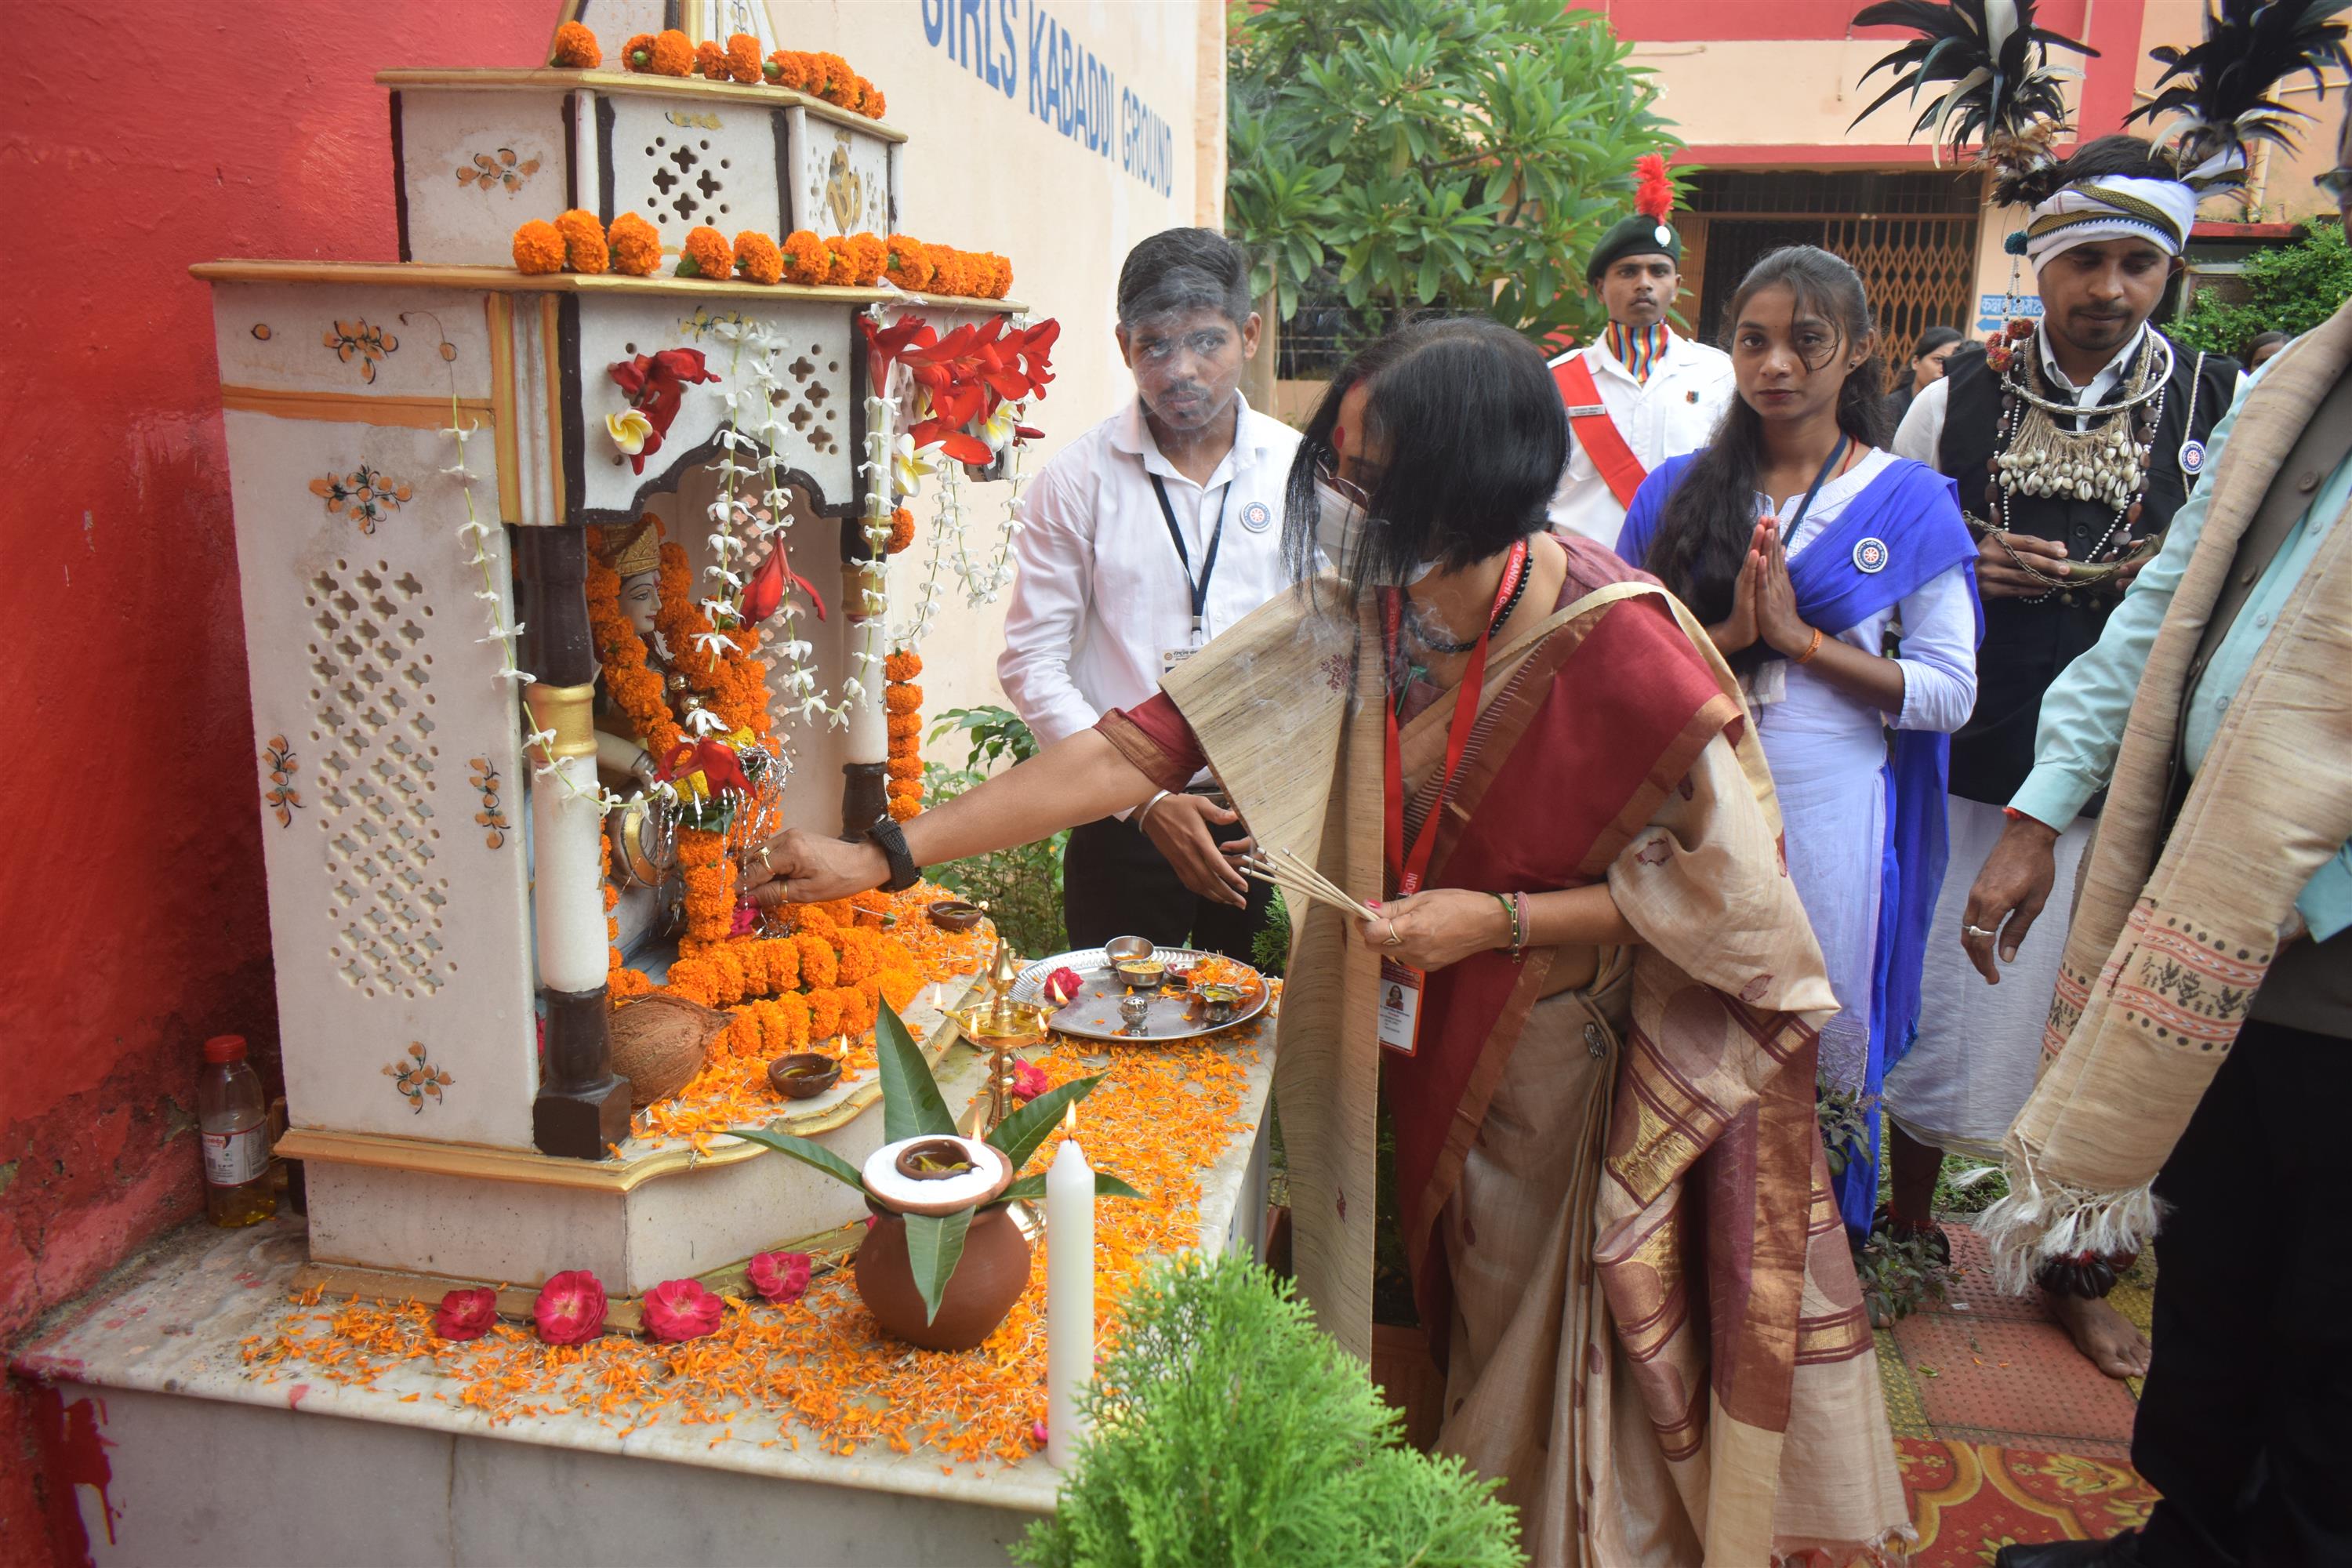 Indira Gandhi Govt Arts & commerce College, Vaishali Nagar, Bhilai